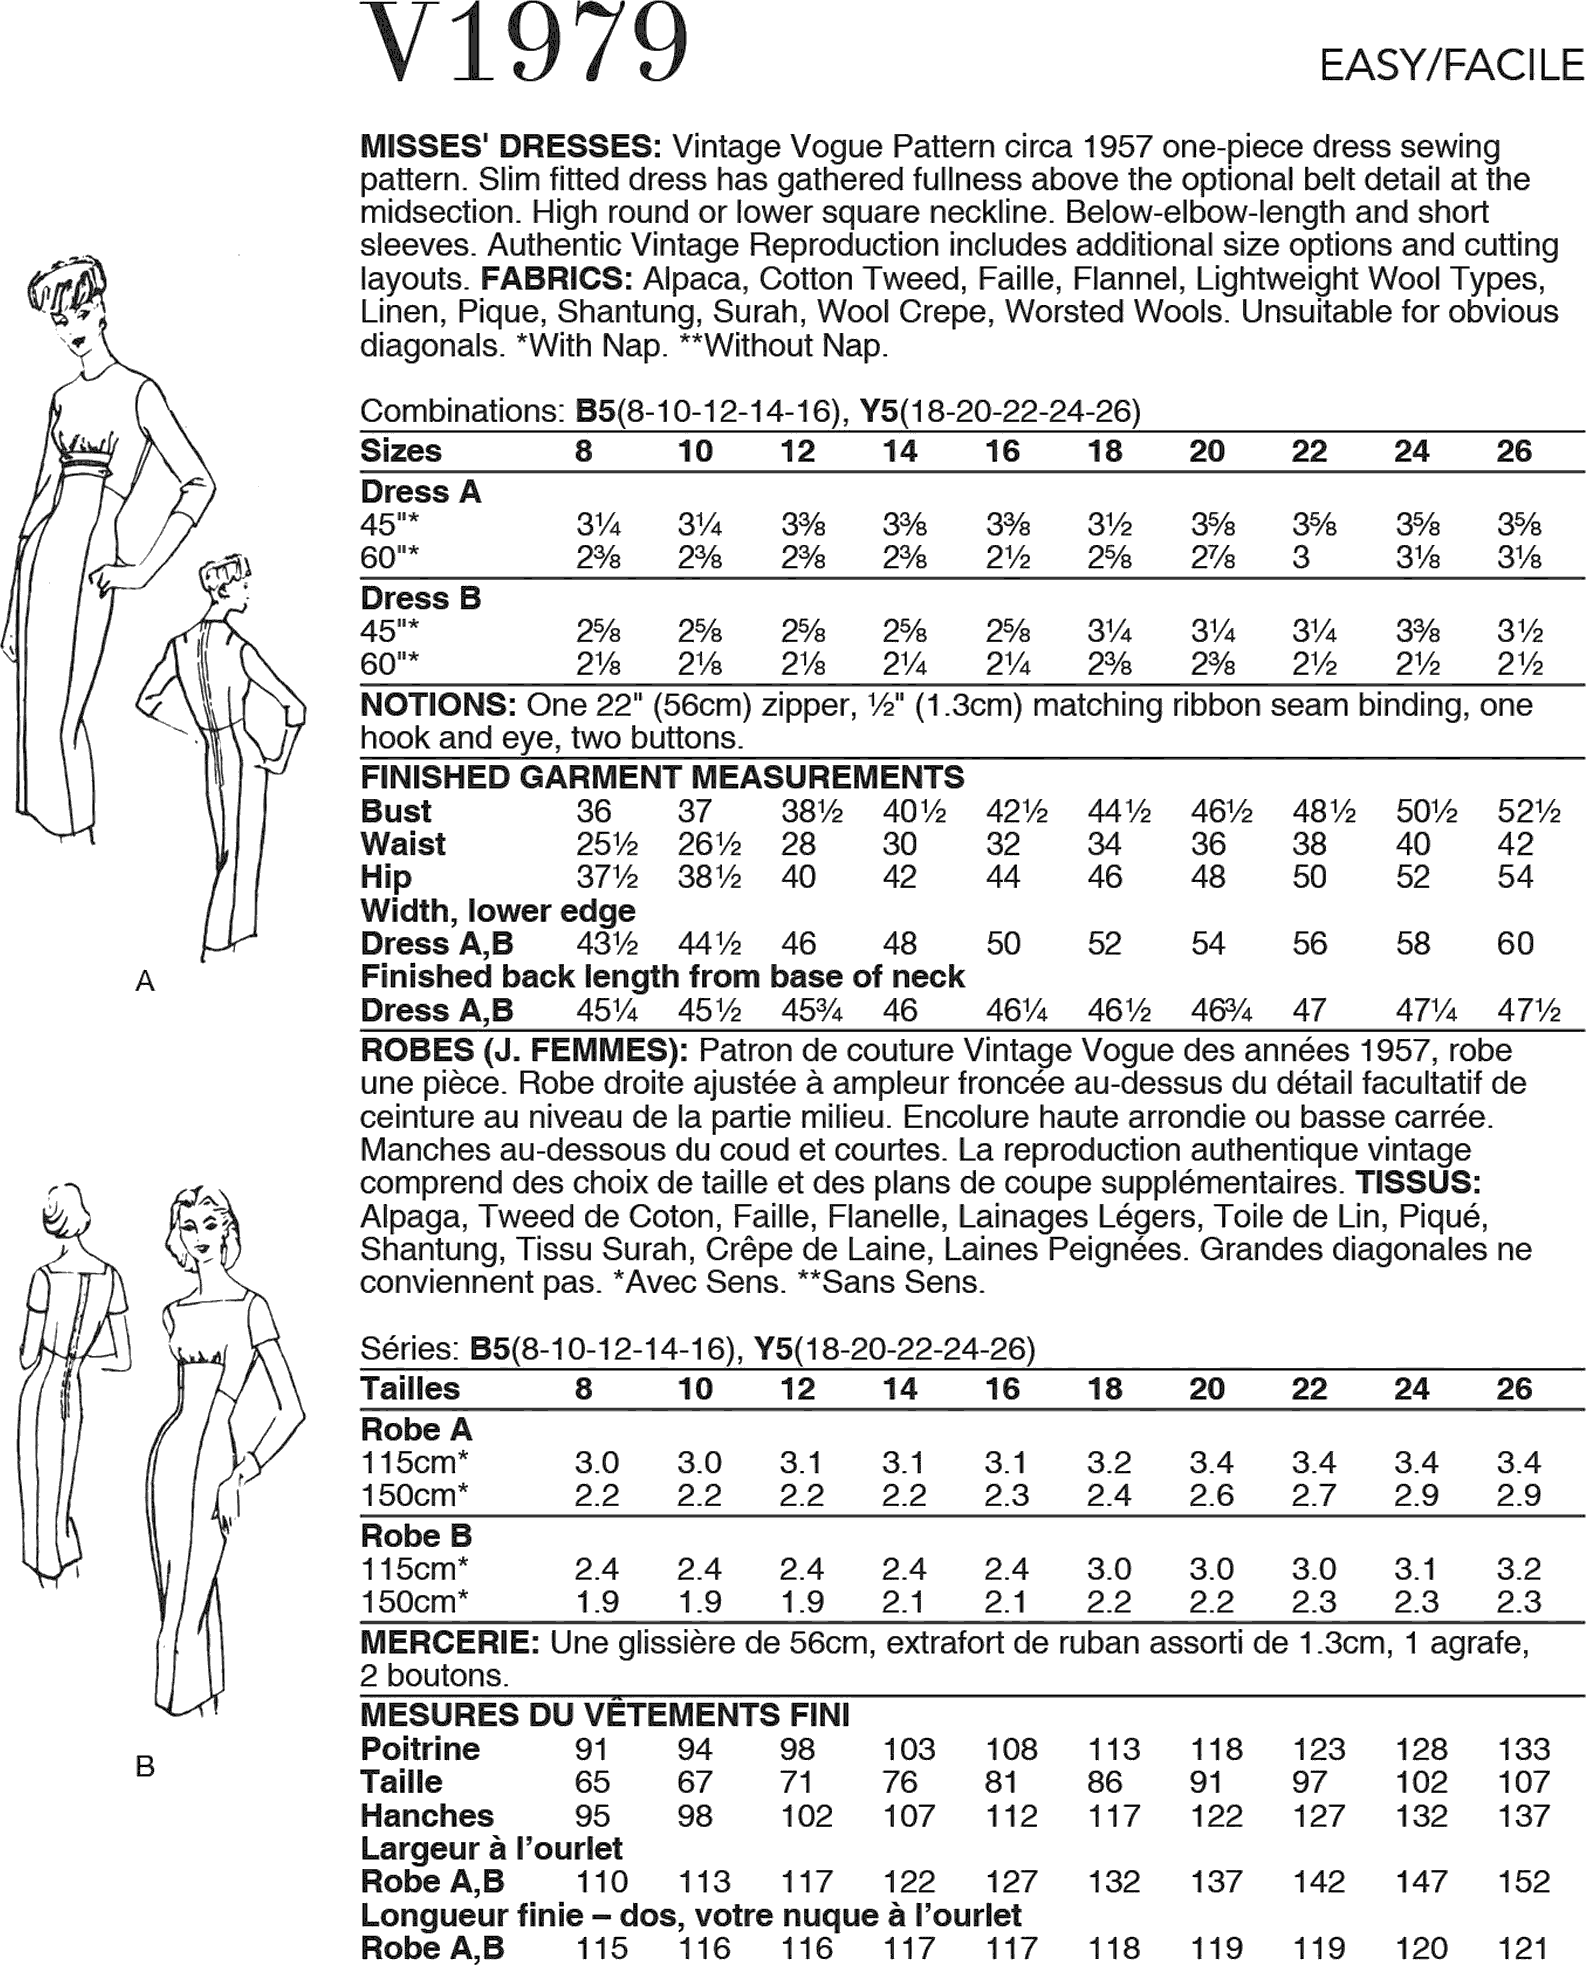 Vogue Pattern V1979 Misses Dresses 1979 Fabric Quantity Requirements From Patternsandplains.com